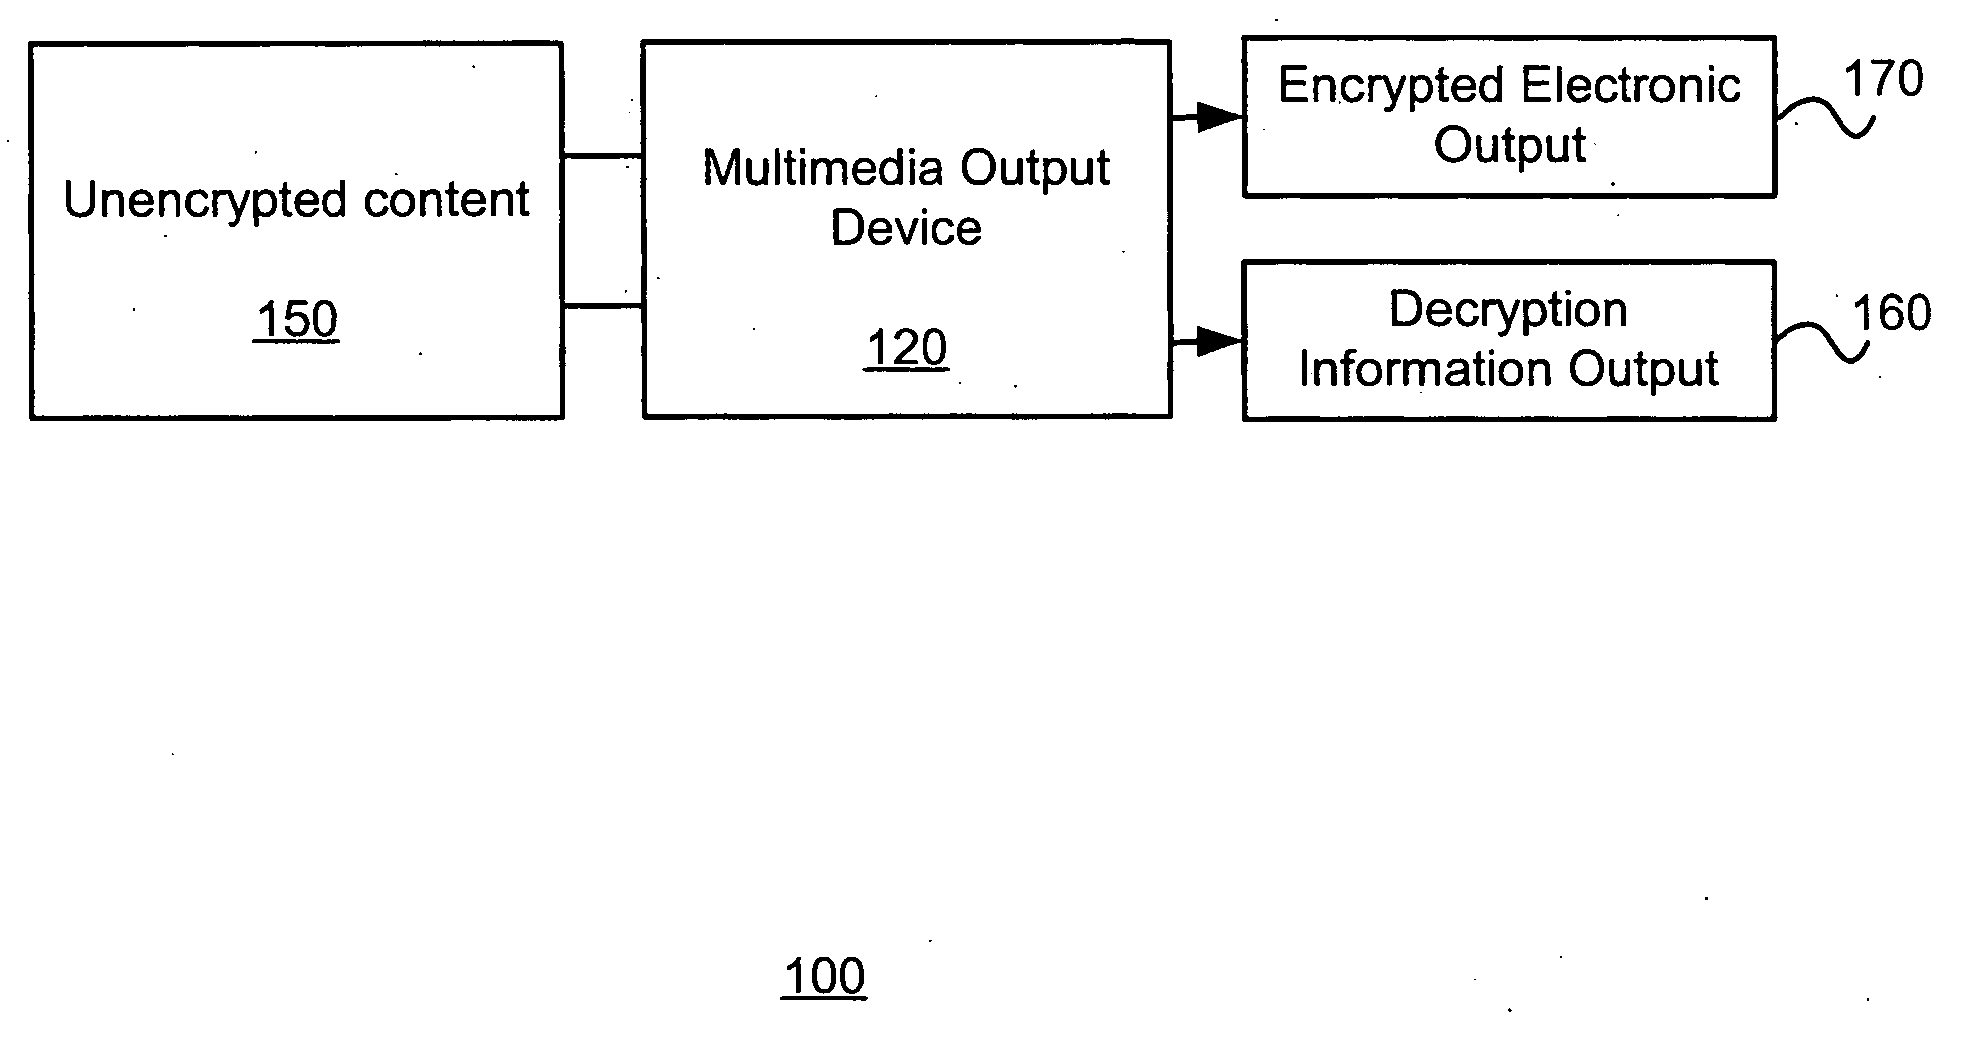 Multimedia output device having embedded encryption functionality